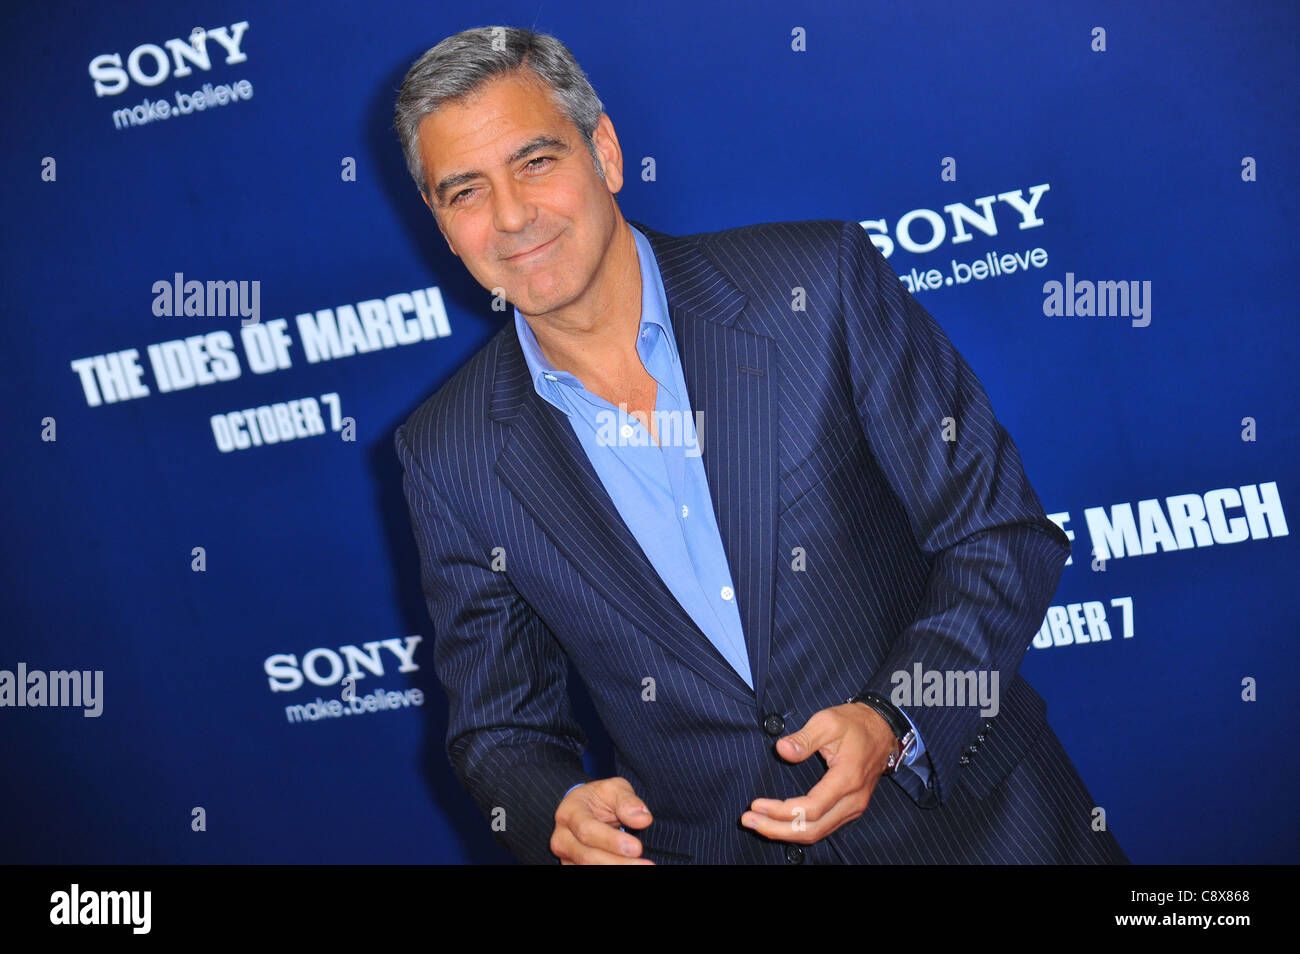 George Clooney arrivalsIDES PremiereZiegfeld mars New York Theatre New York NY le 5 octobre 2011 Photo Gregorio T Binuya/Everett Banque D'Images